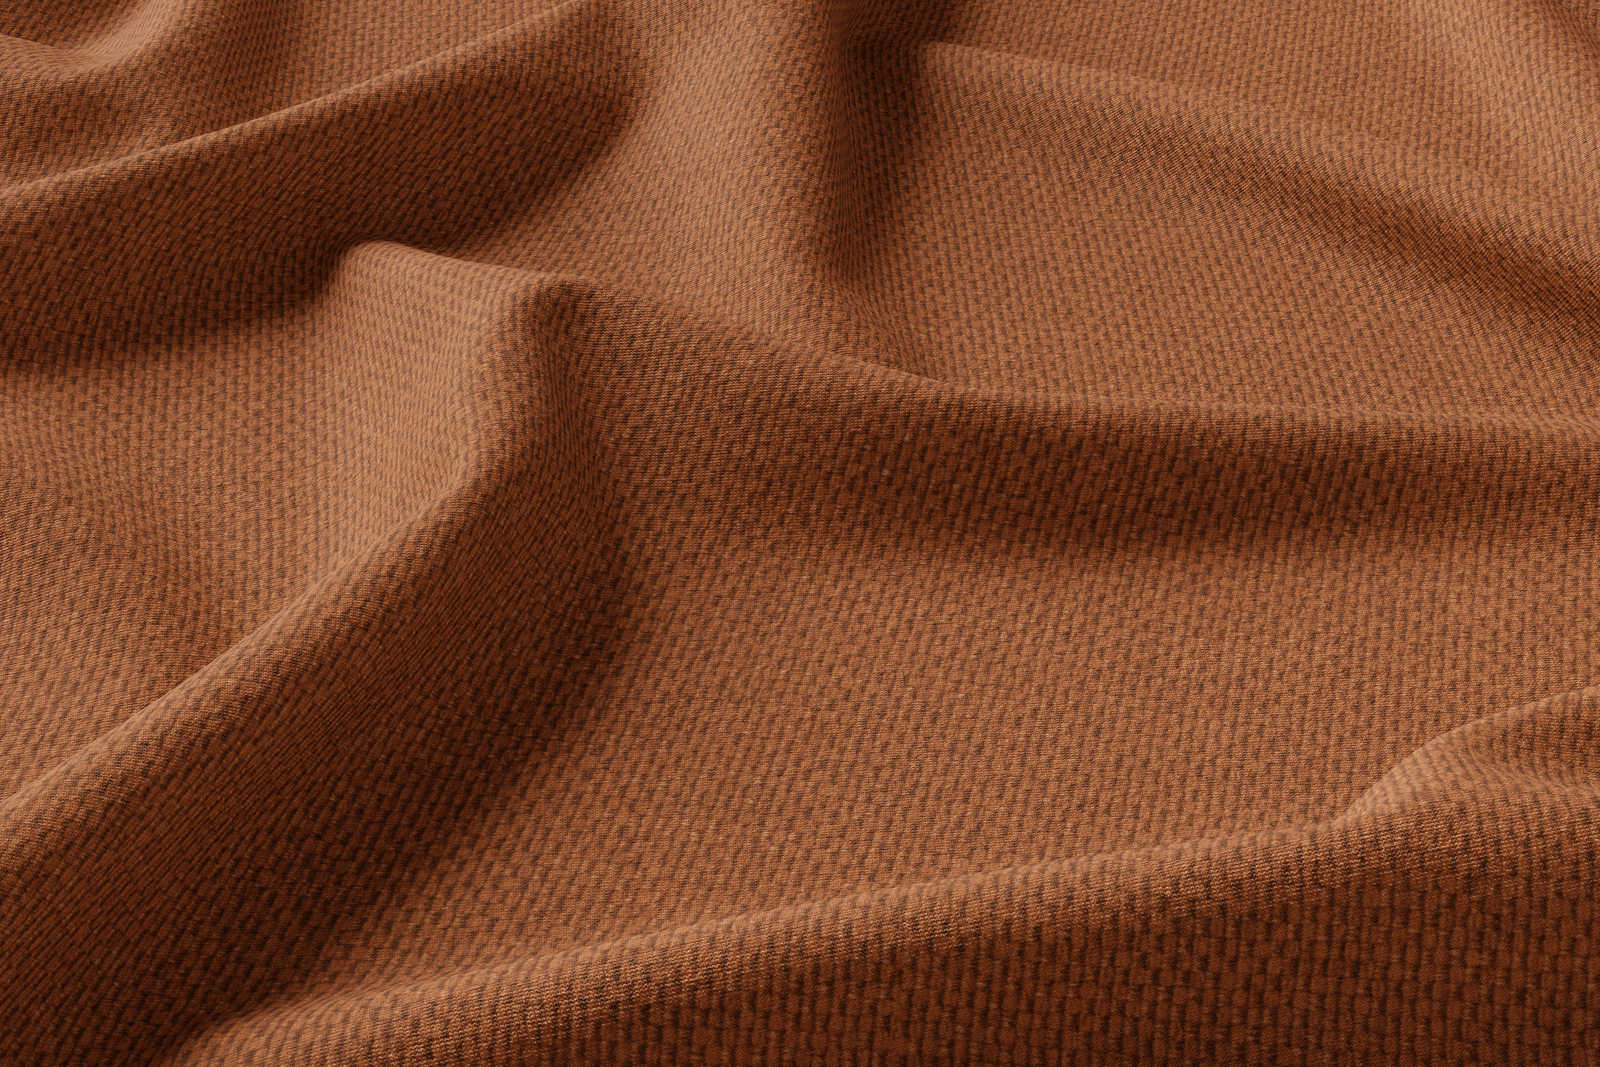             Decorative loop scarf 140 cm x 245 cm synthetic fibre terracotta
        